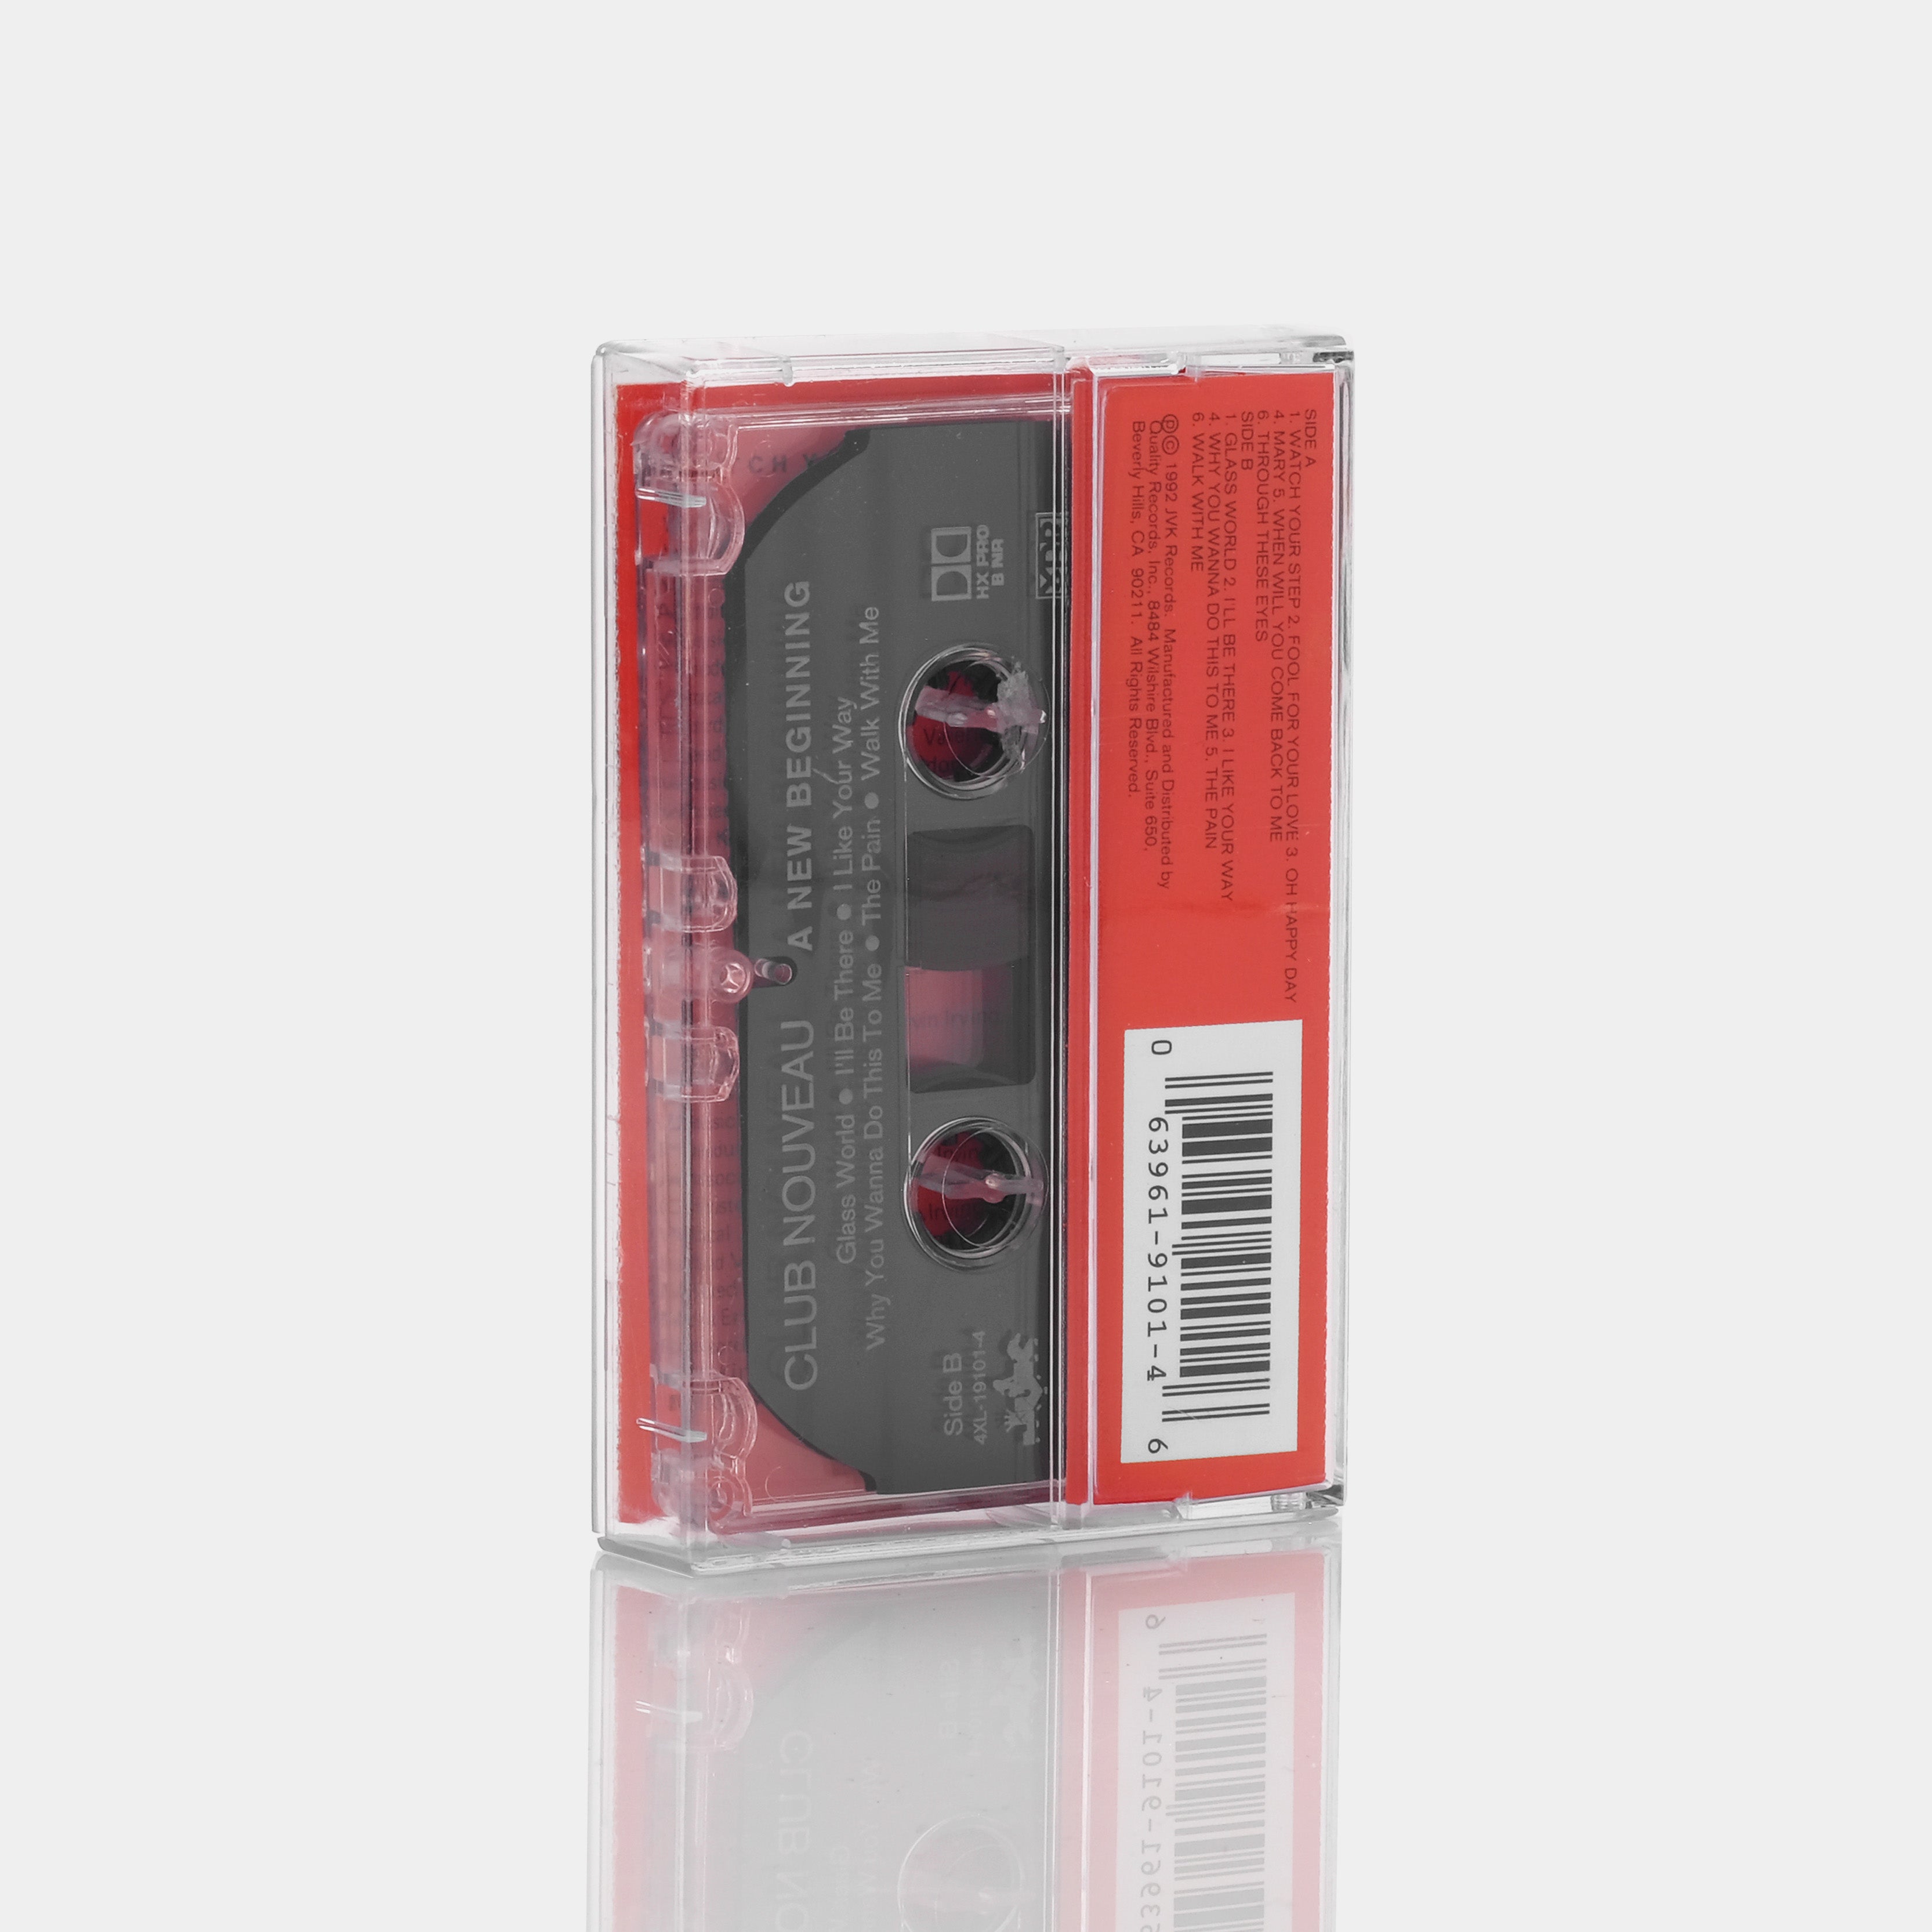 Club Nouveau - A New Beginning Cassette Tape